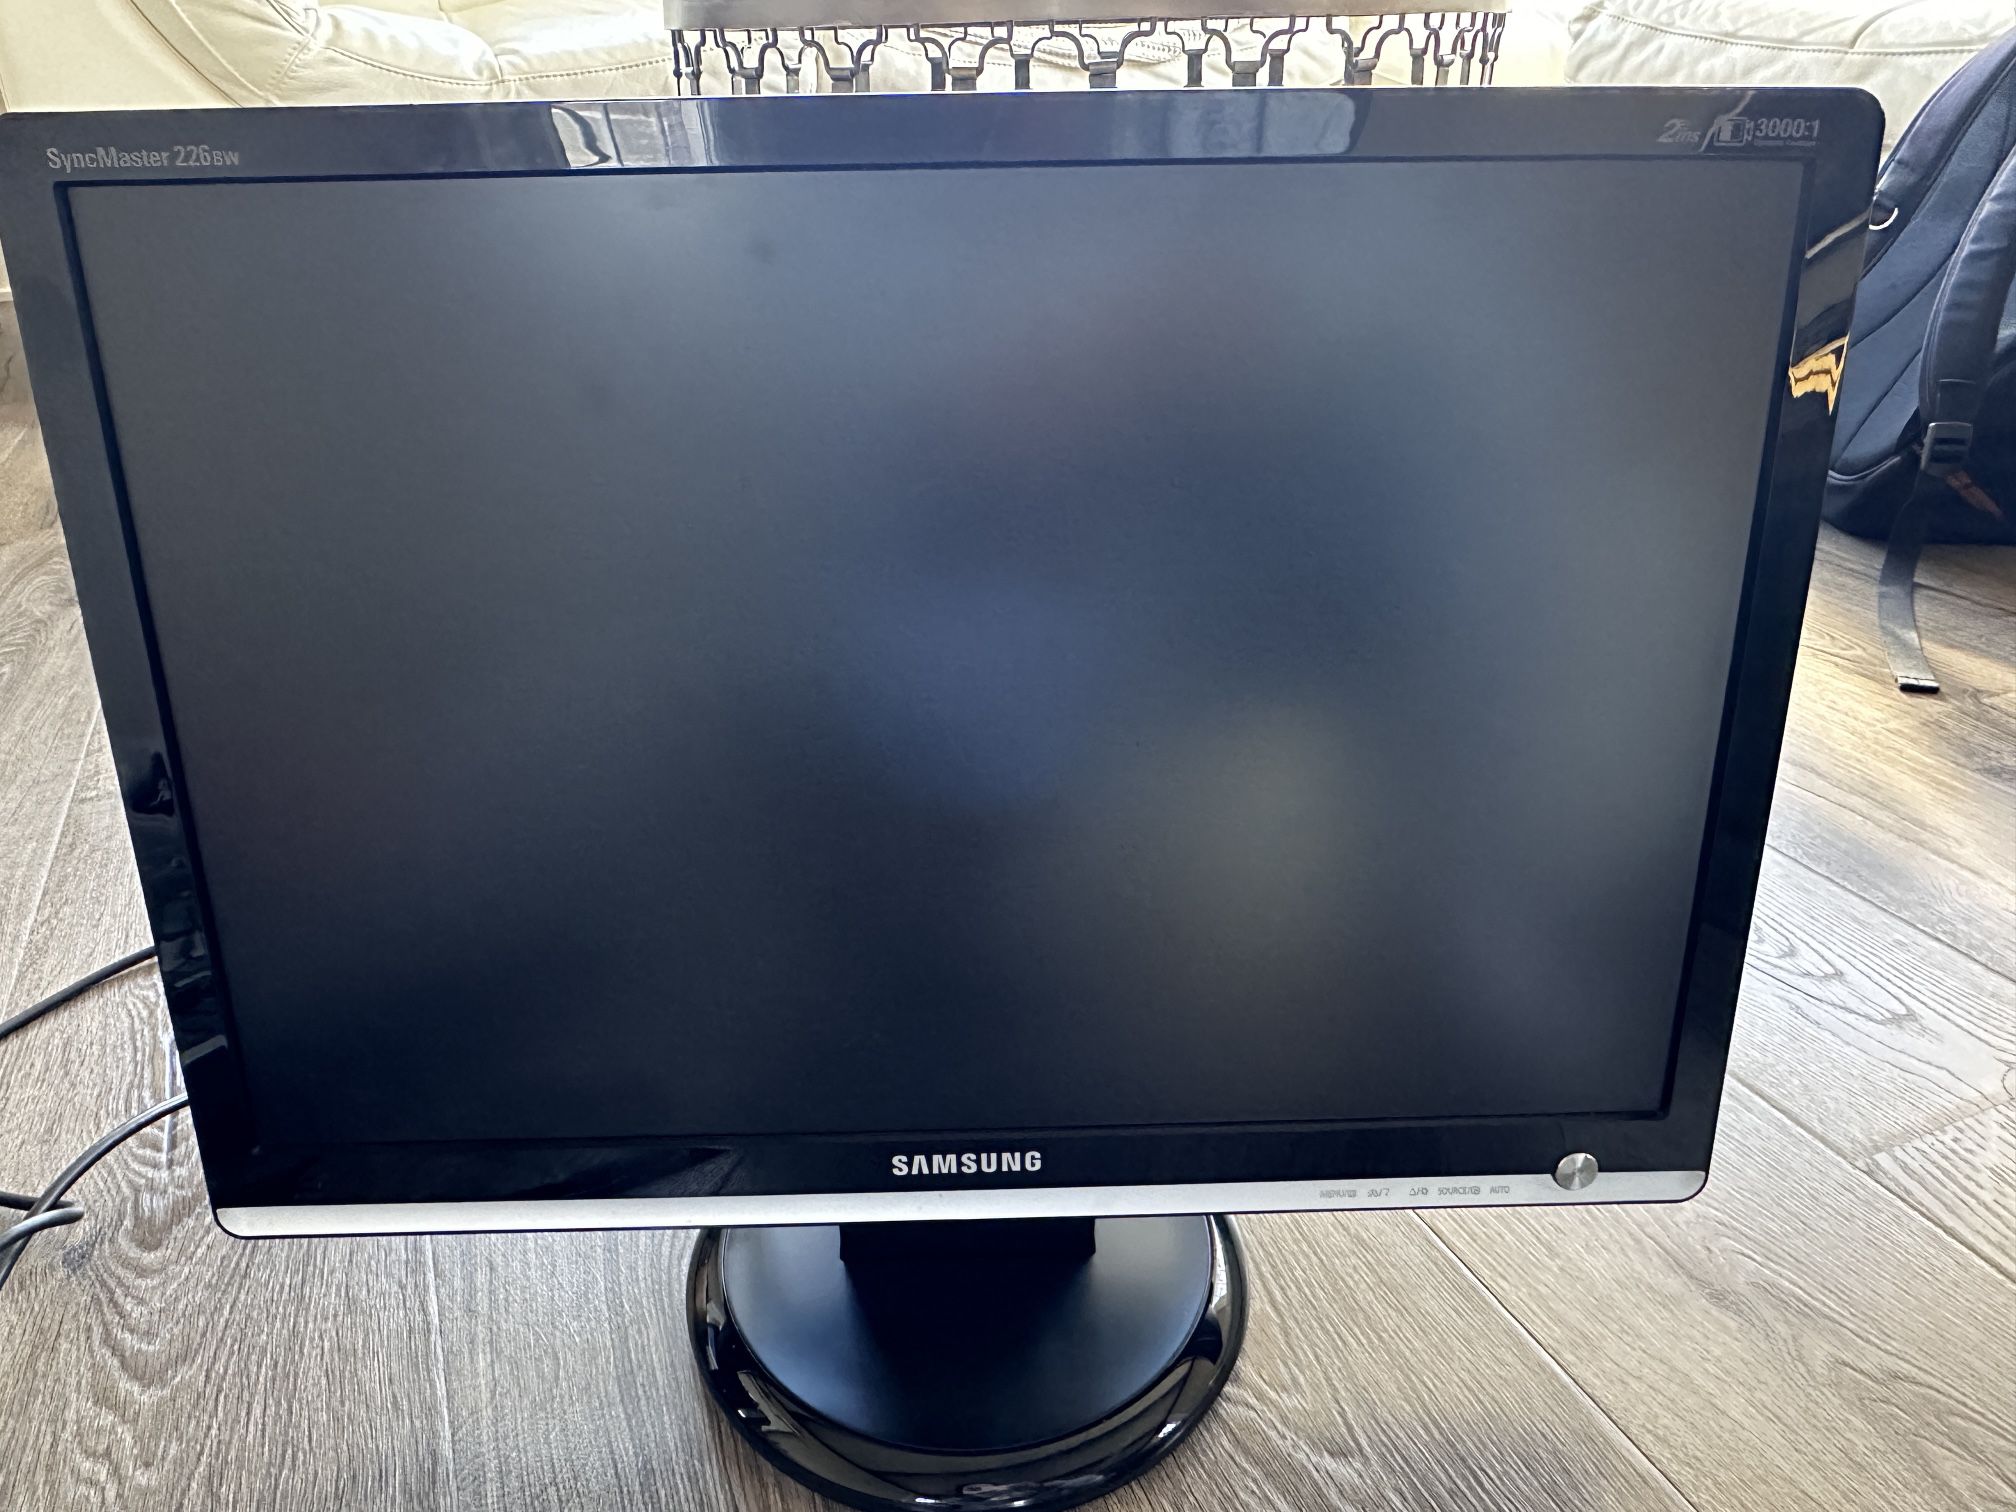 Samsung monitor with keyboard 